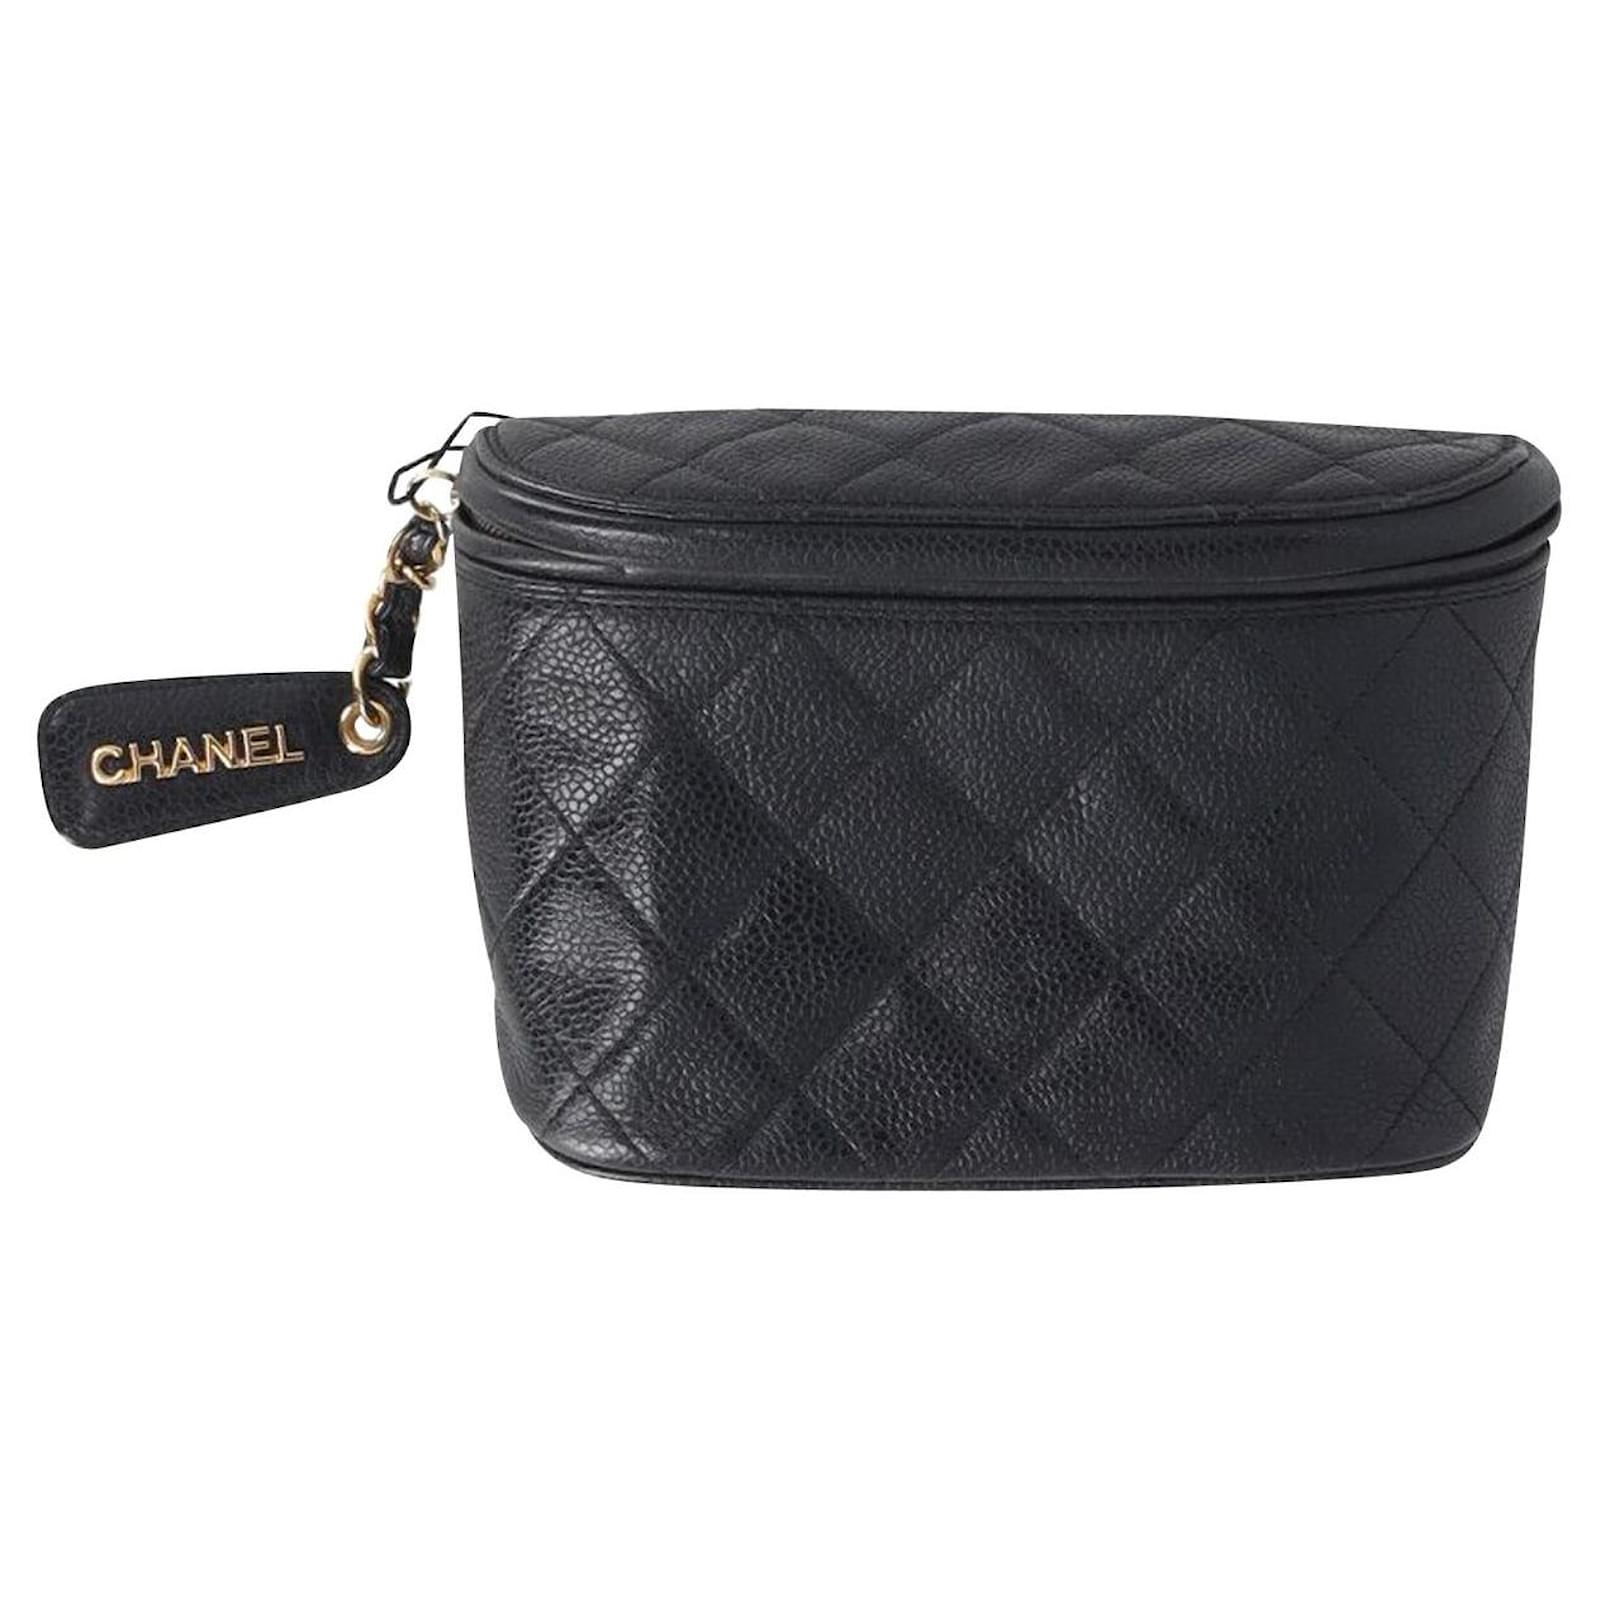 Handbags Chanel Chanel Vintage Belt Bag in Black Caviar Leather Size Unique Inter